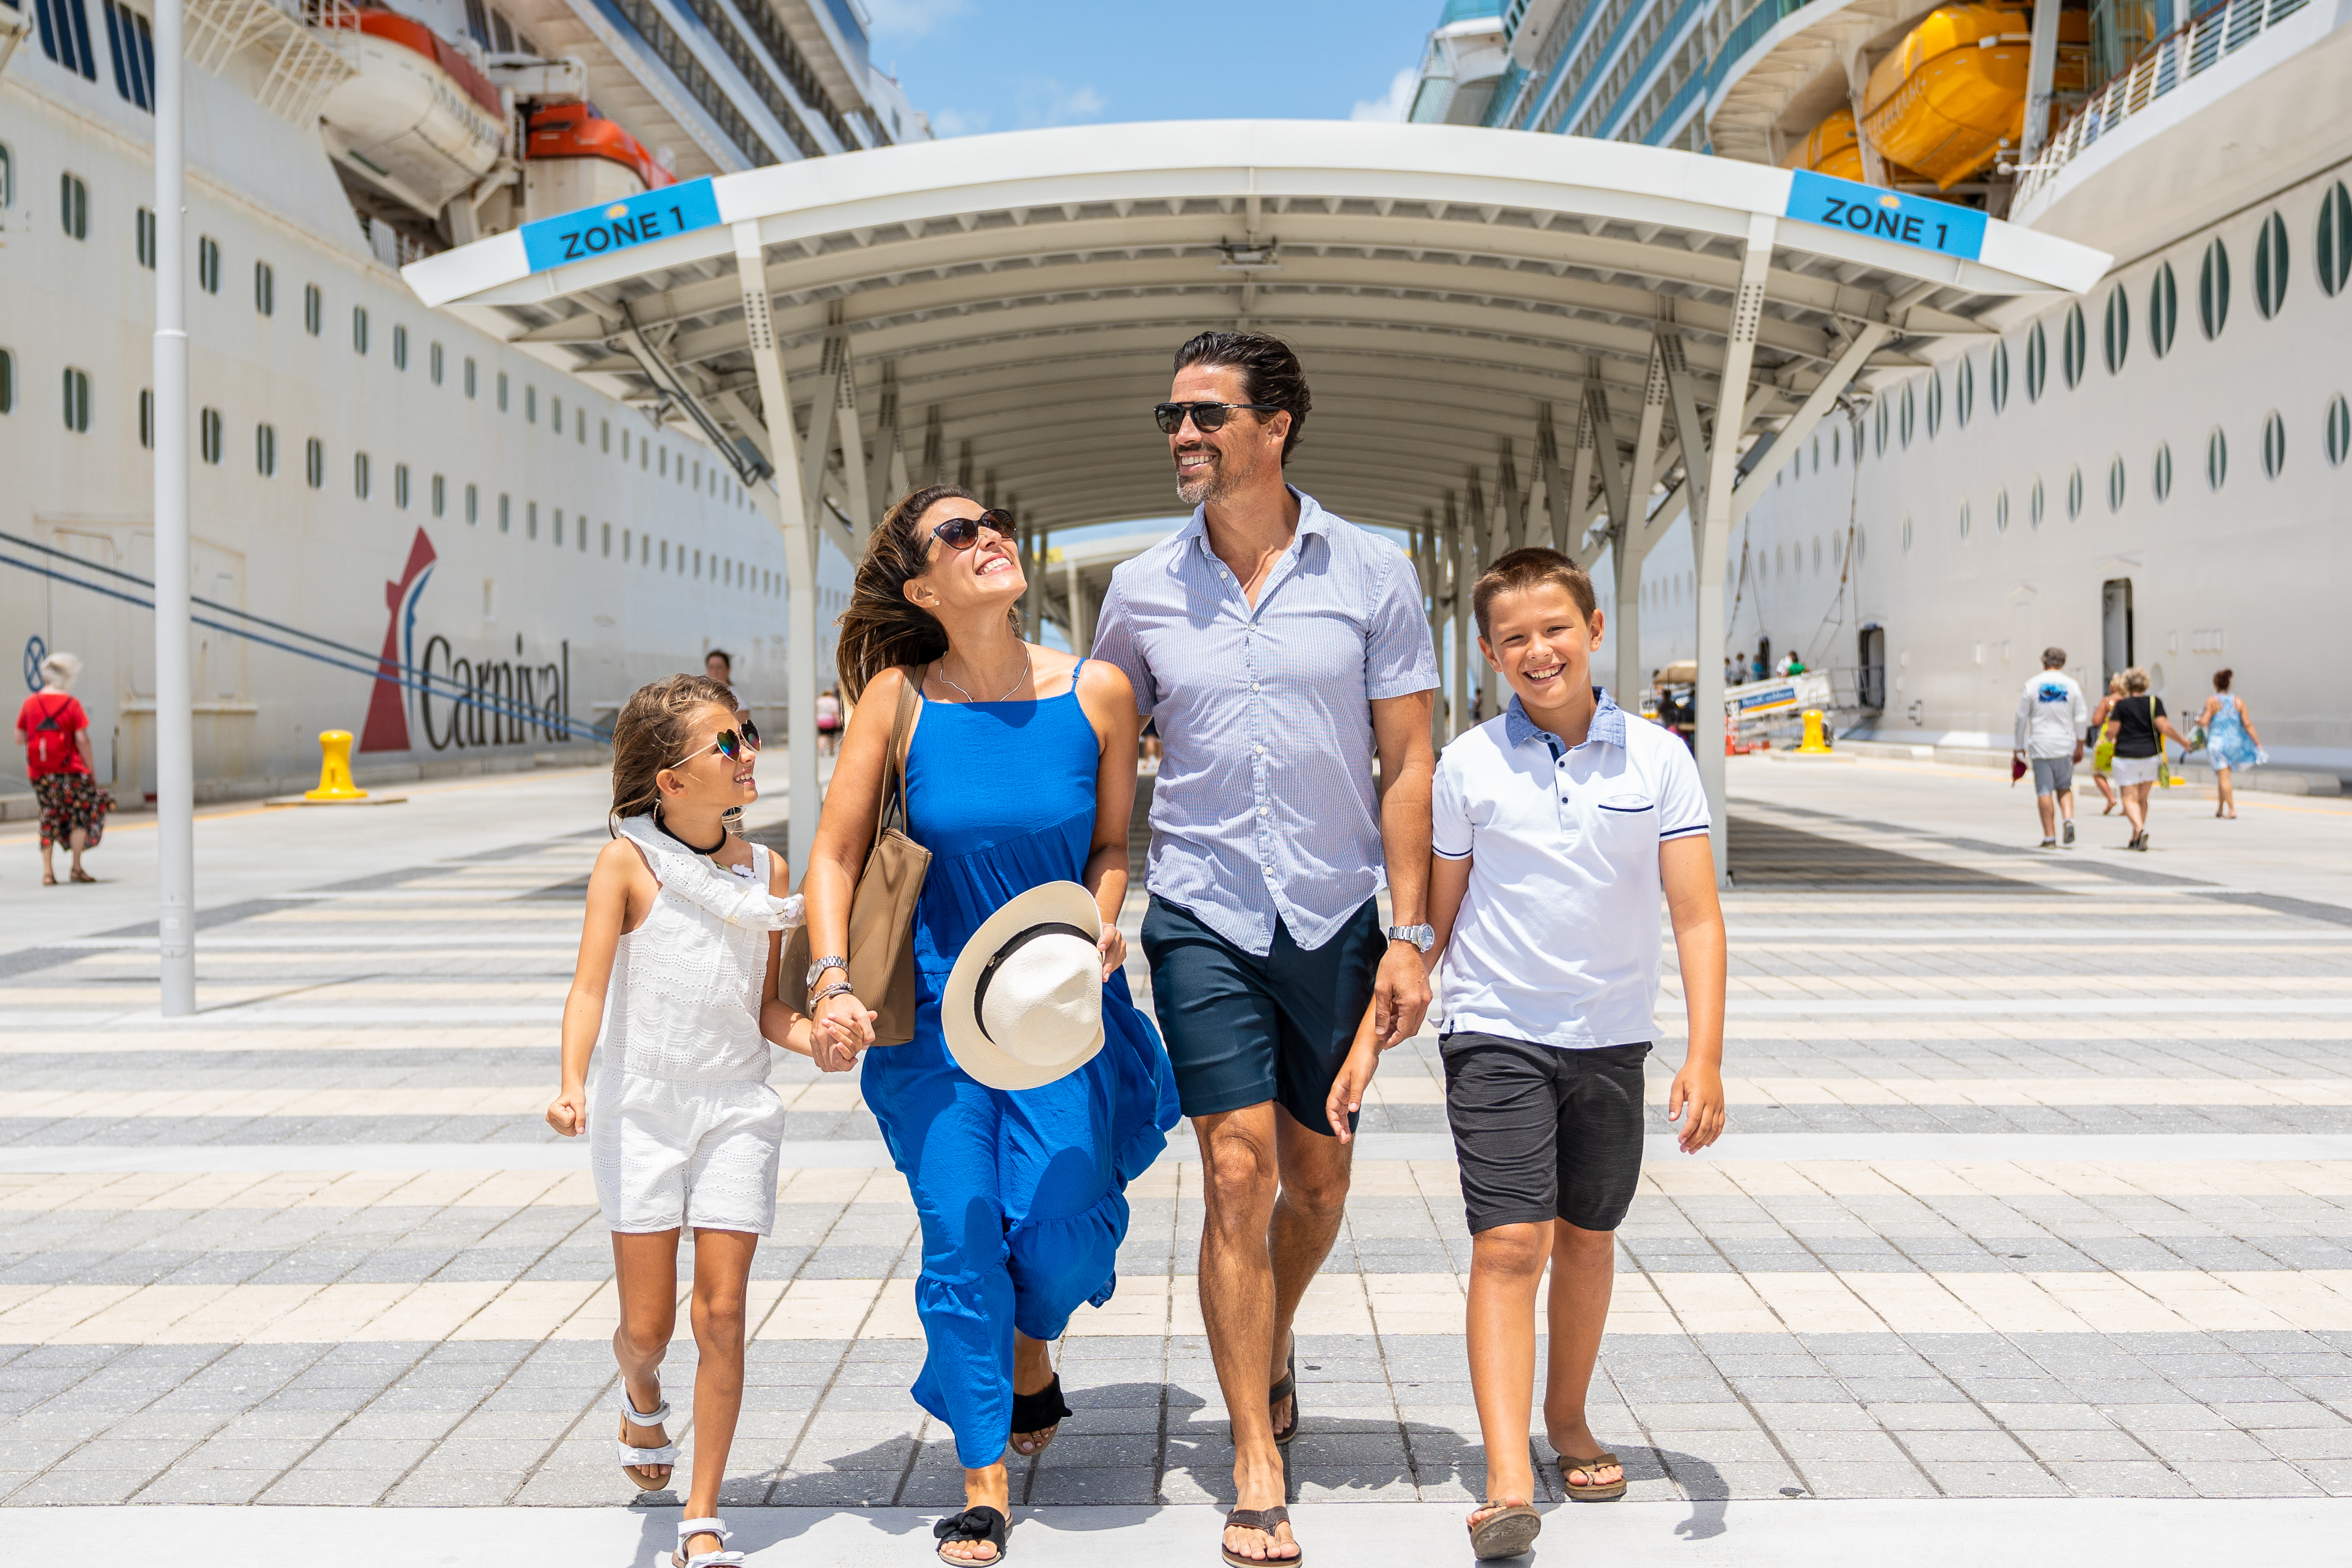 Nassau Cruise Port Breaks Annual Passenger Record 